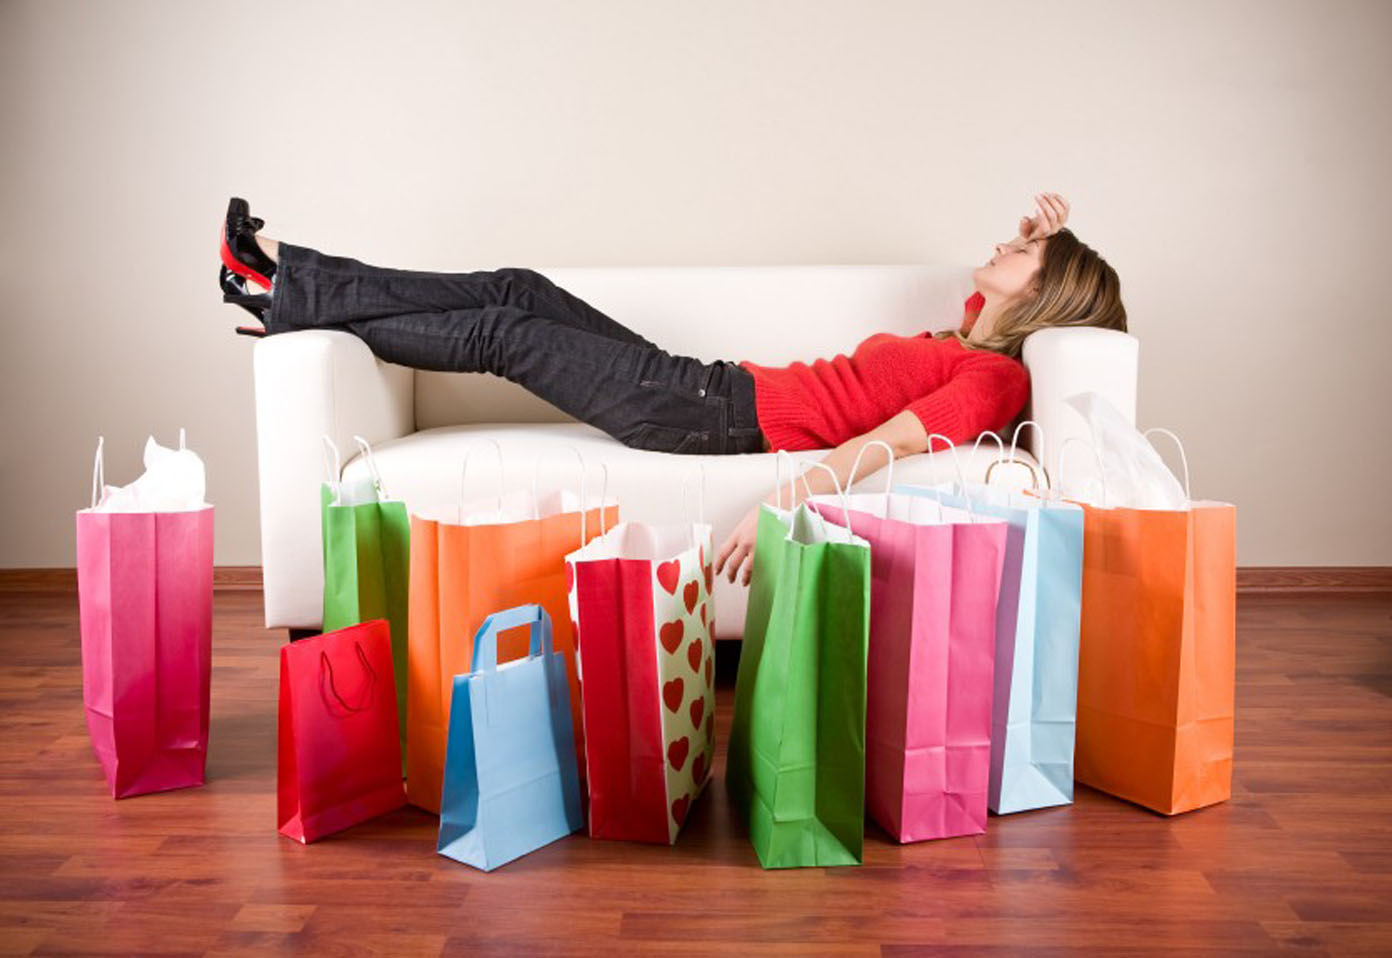 6 ways to identify a shopping addict